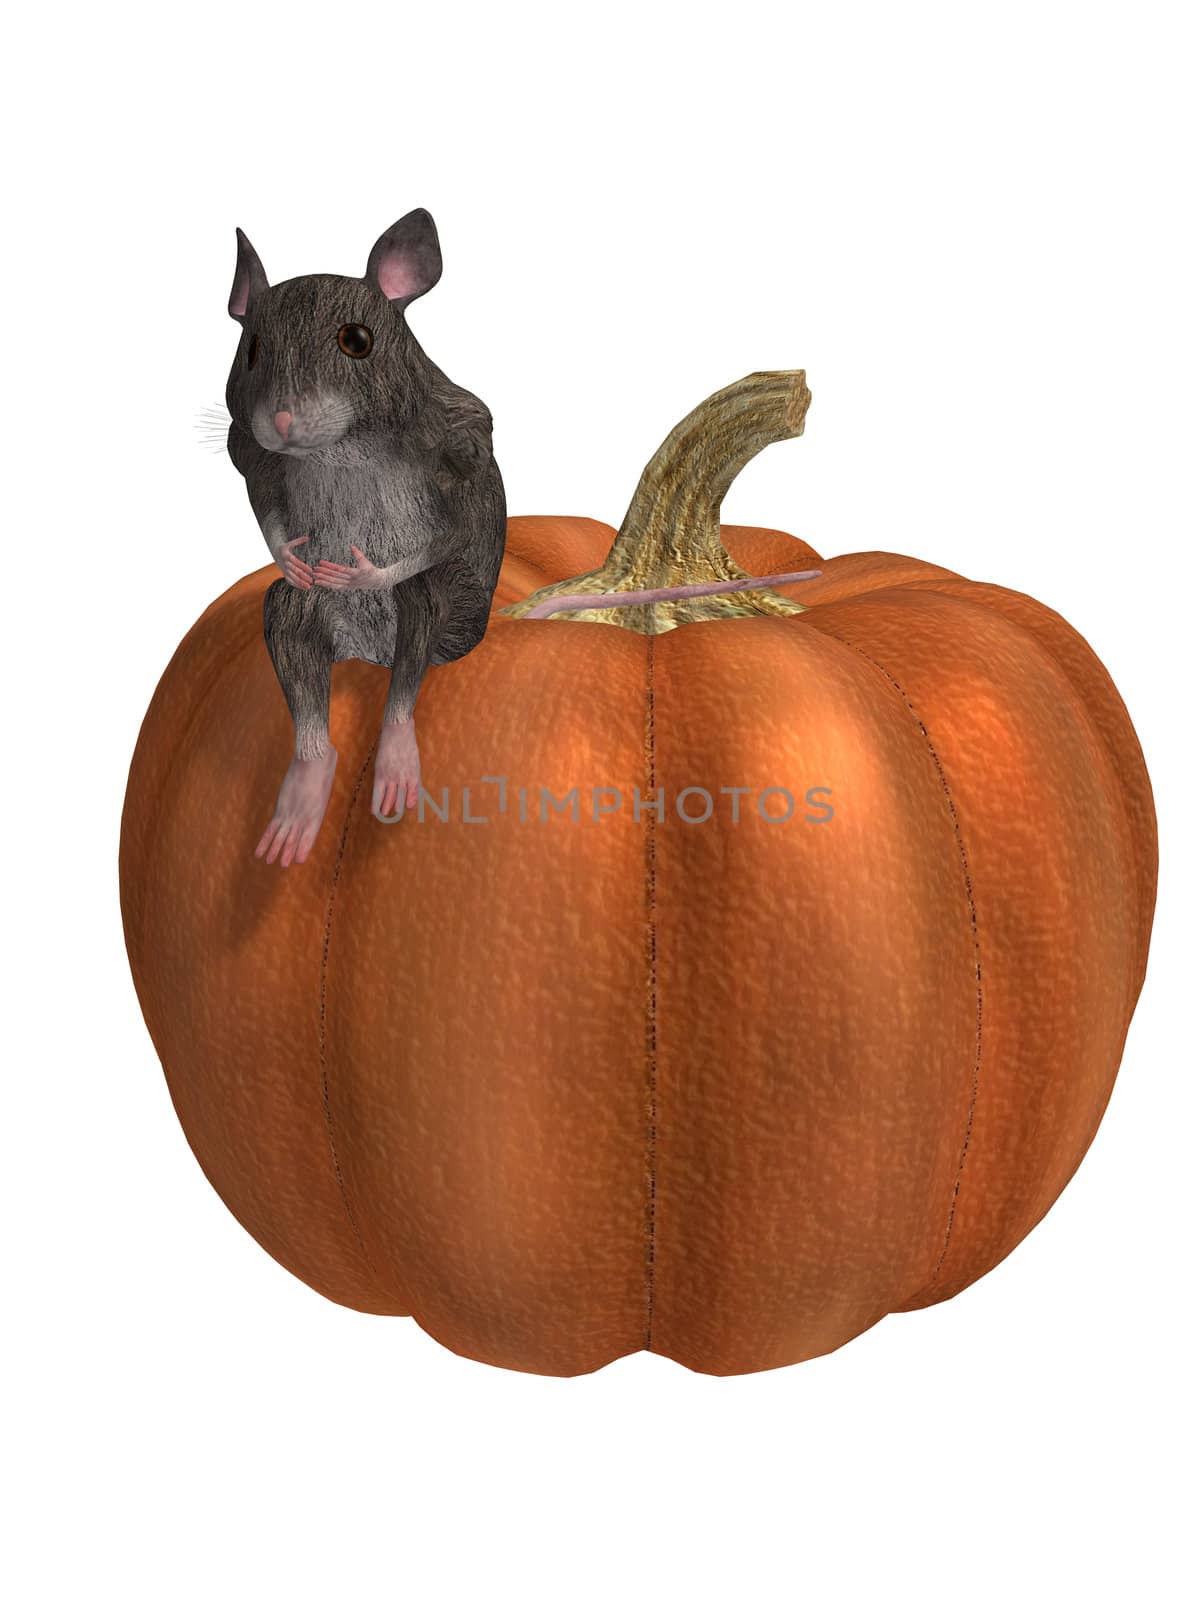 Mouse On A Pumpkin by kathygold